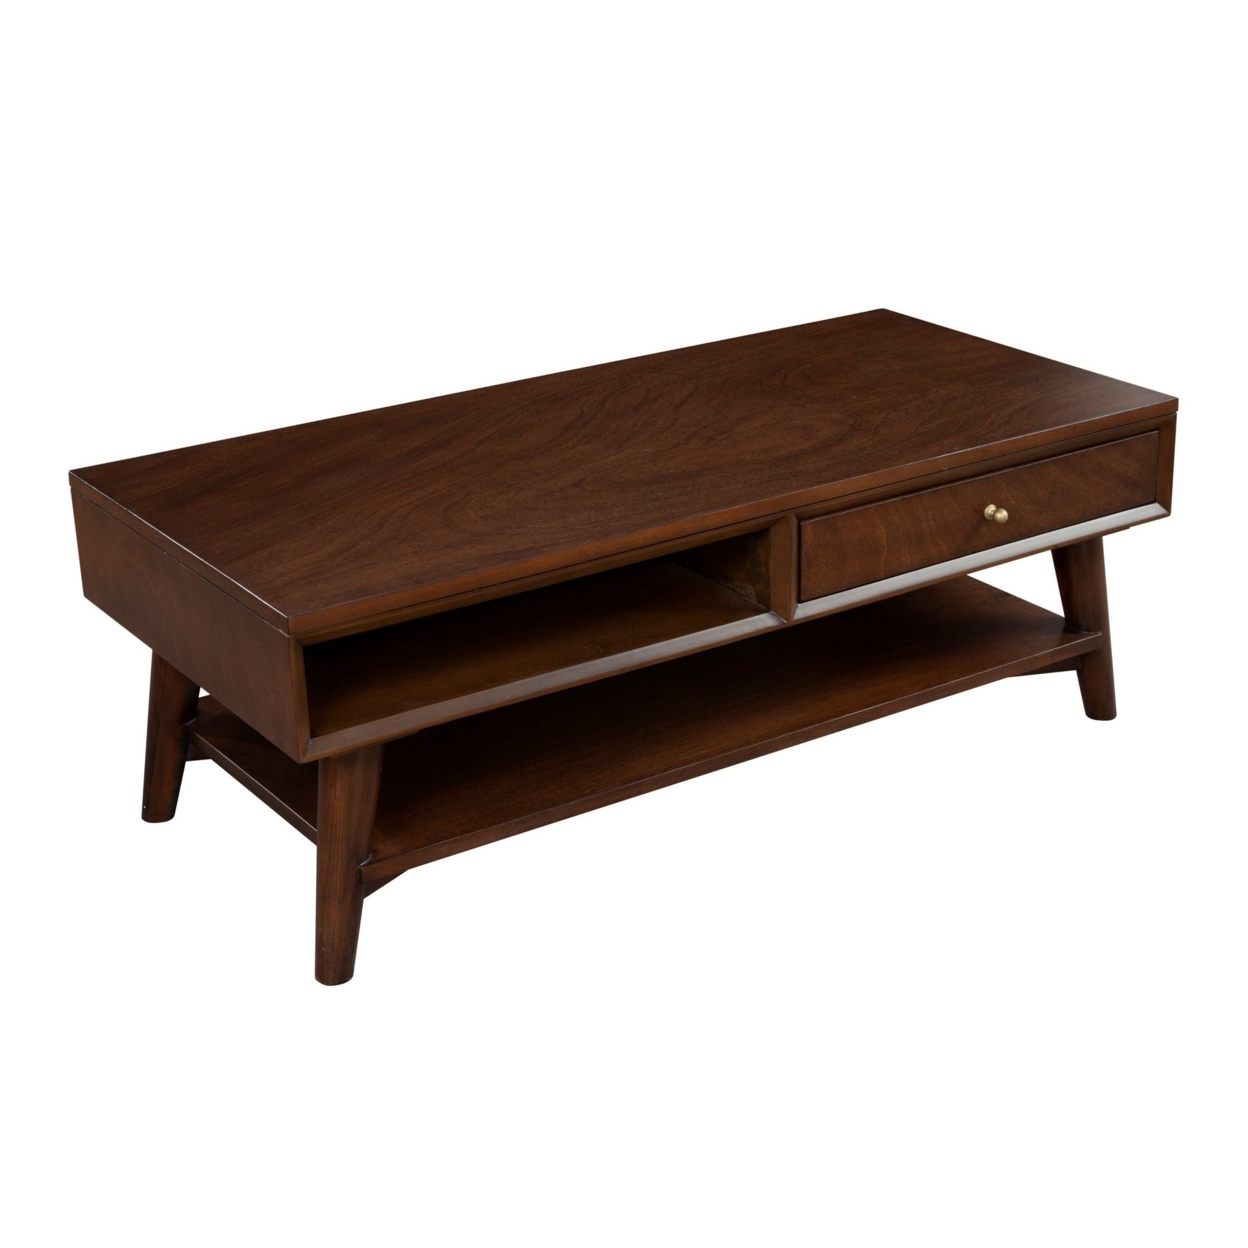 Coffee Table With 1 Drawer And Open Shelf, Walnut Brown- Saltoro Sherpi